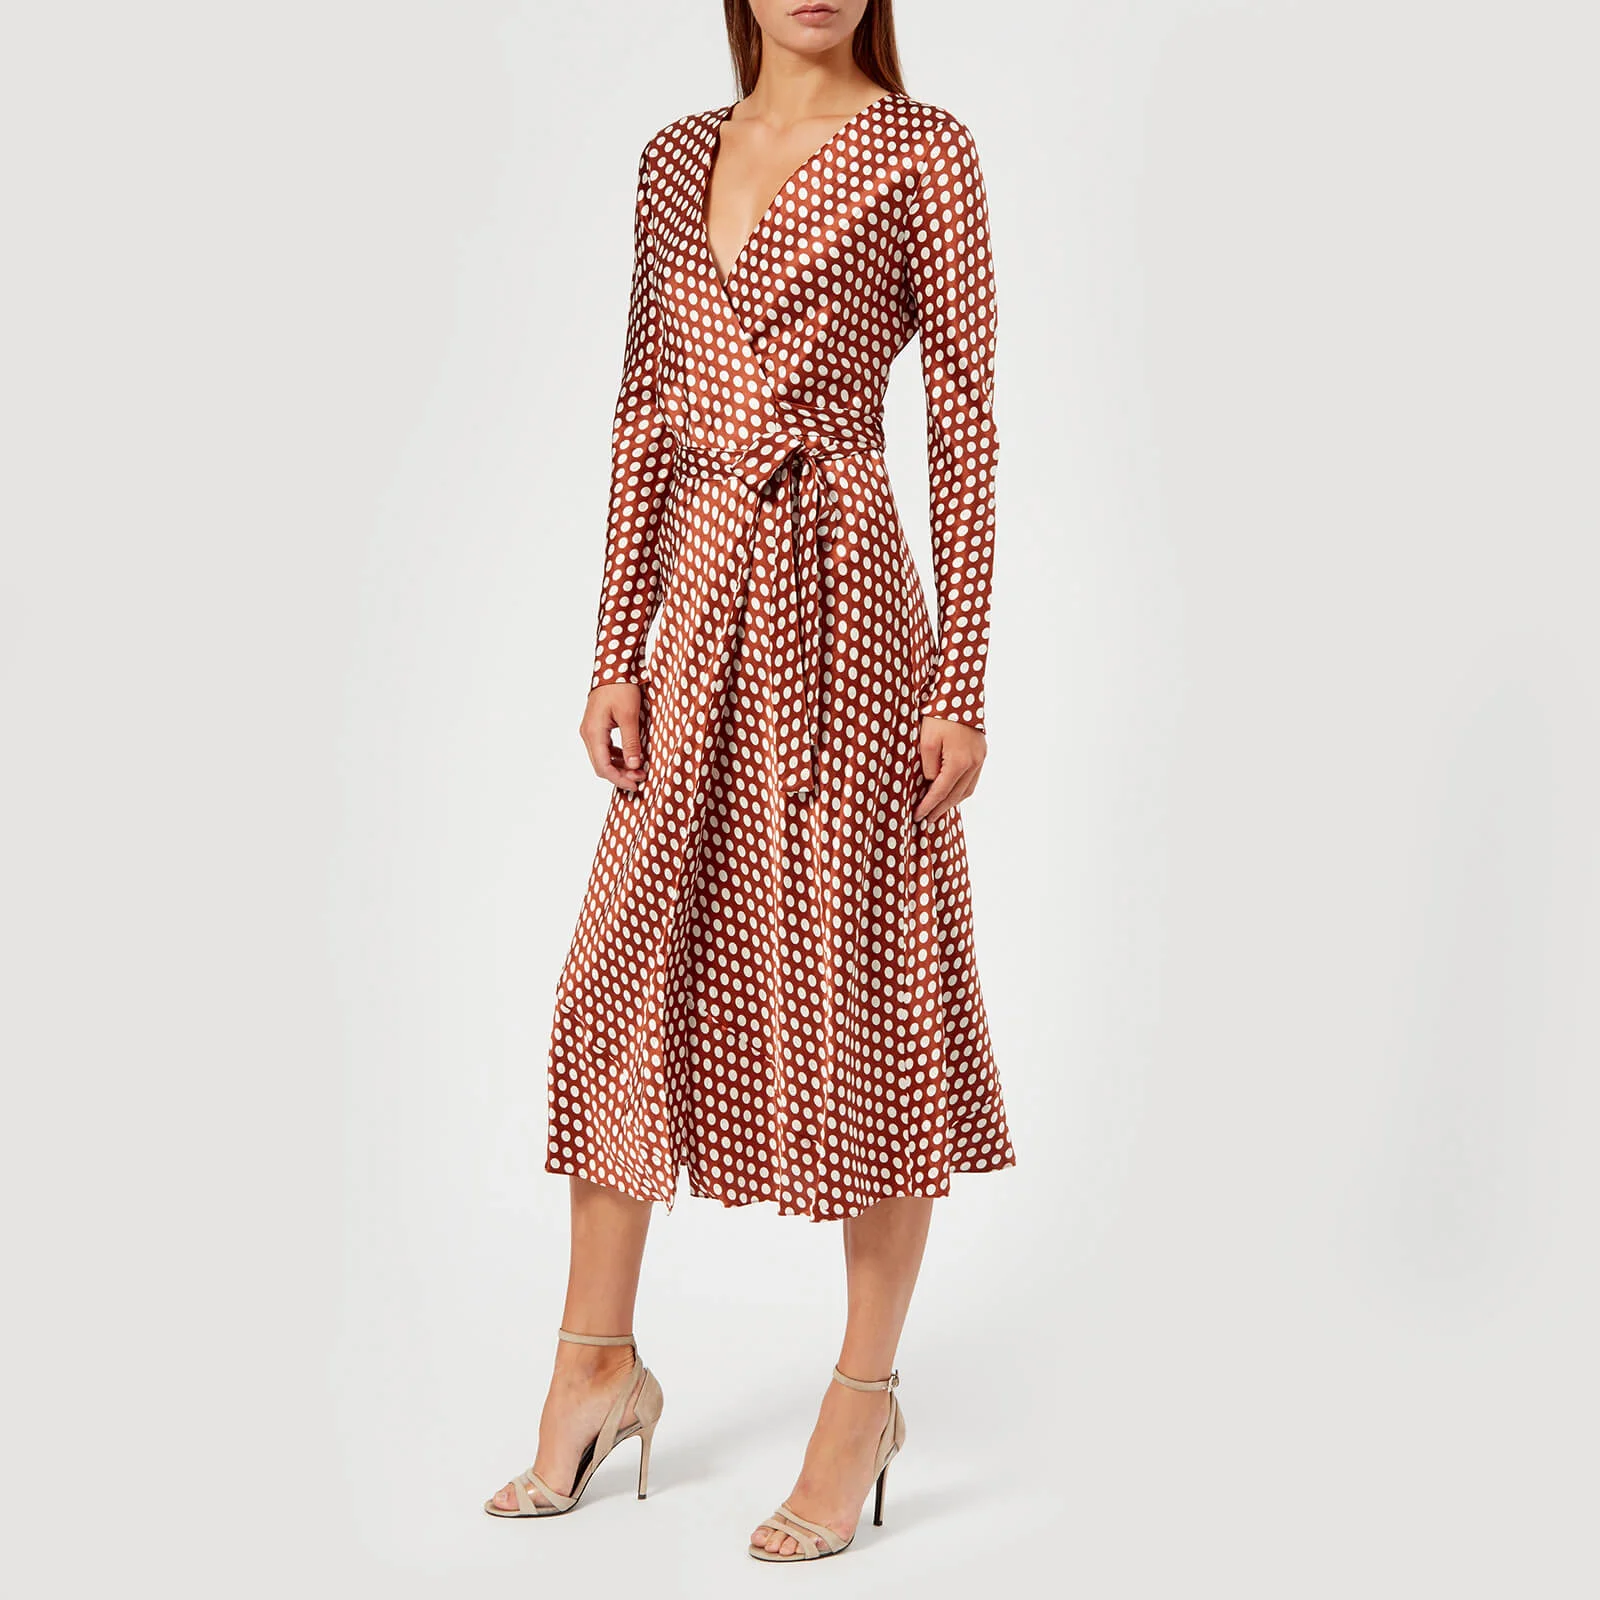 Diane von Furstenberg Women's Long Sleeve Midi Woven Wrap Dress - Baker Dot Small Sienna Image 1